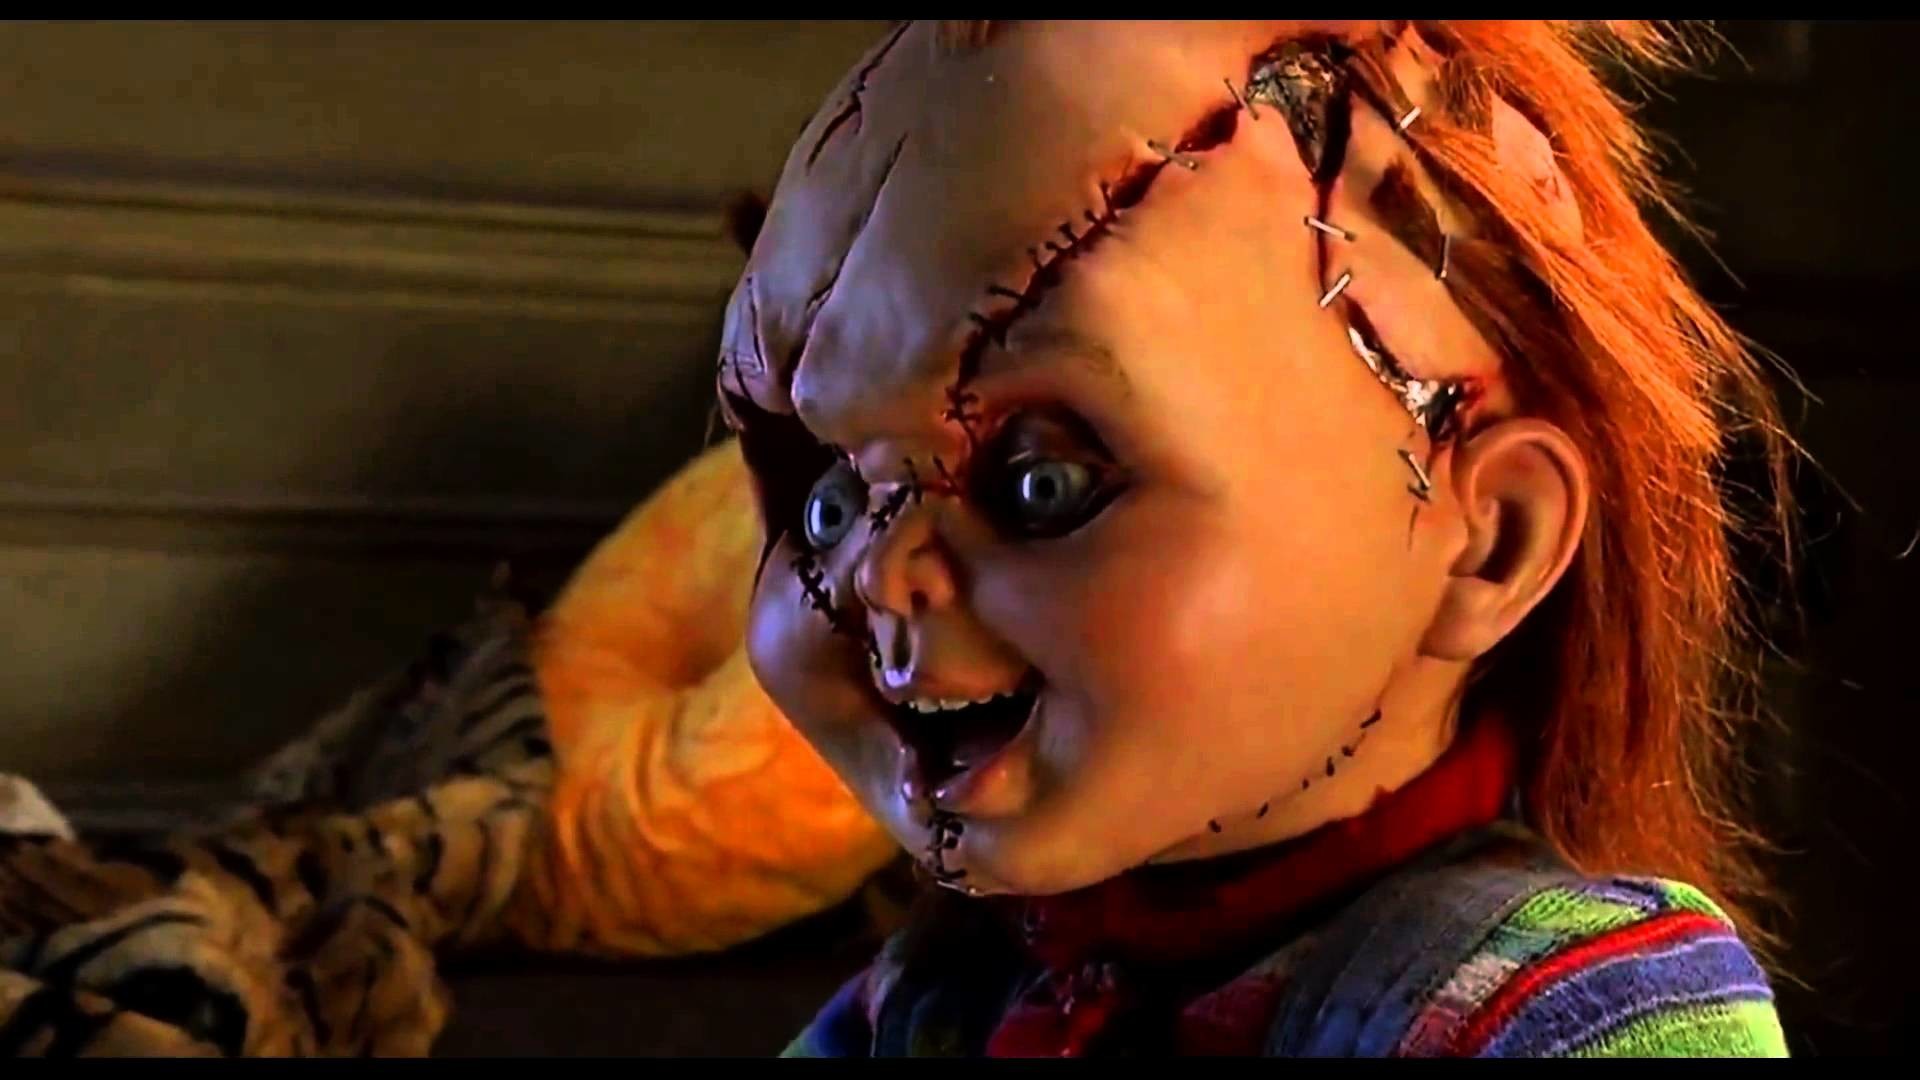 I love you – Bride of Chucky 1080p HD